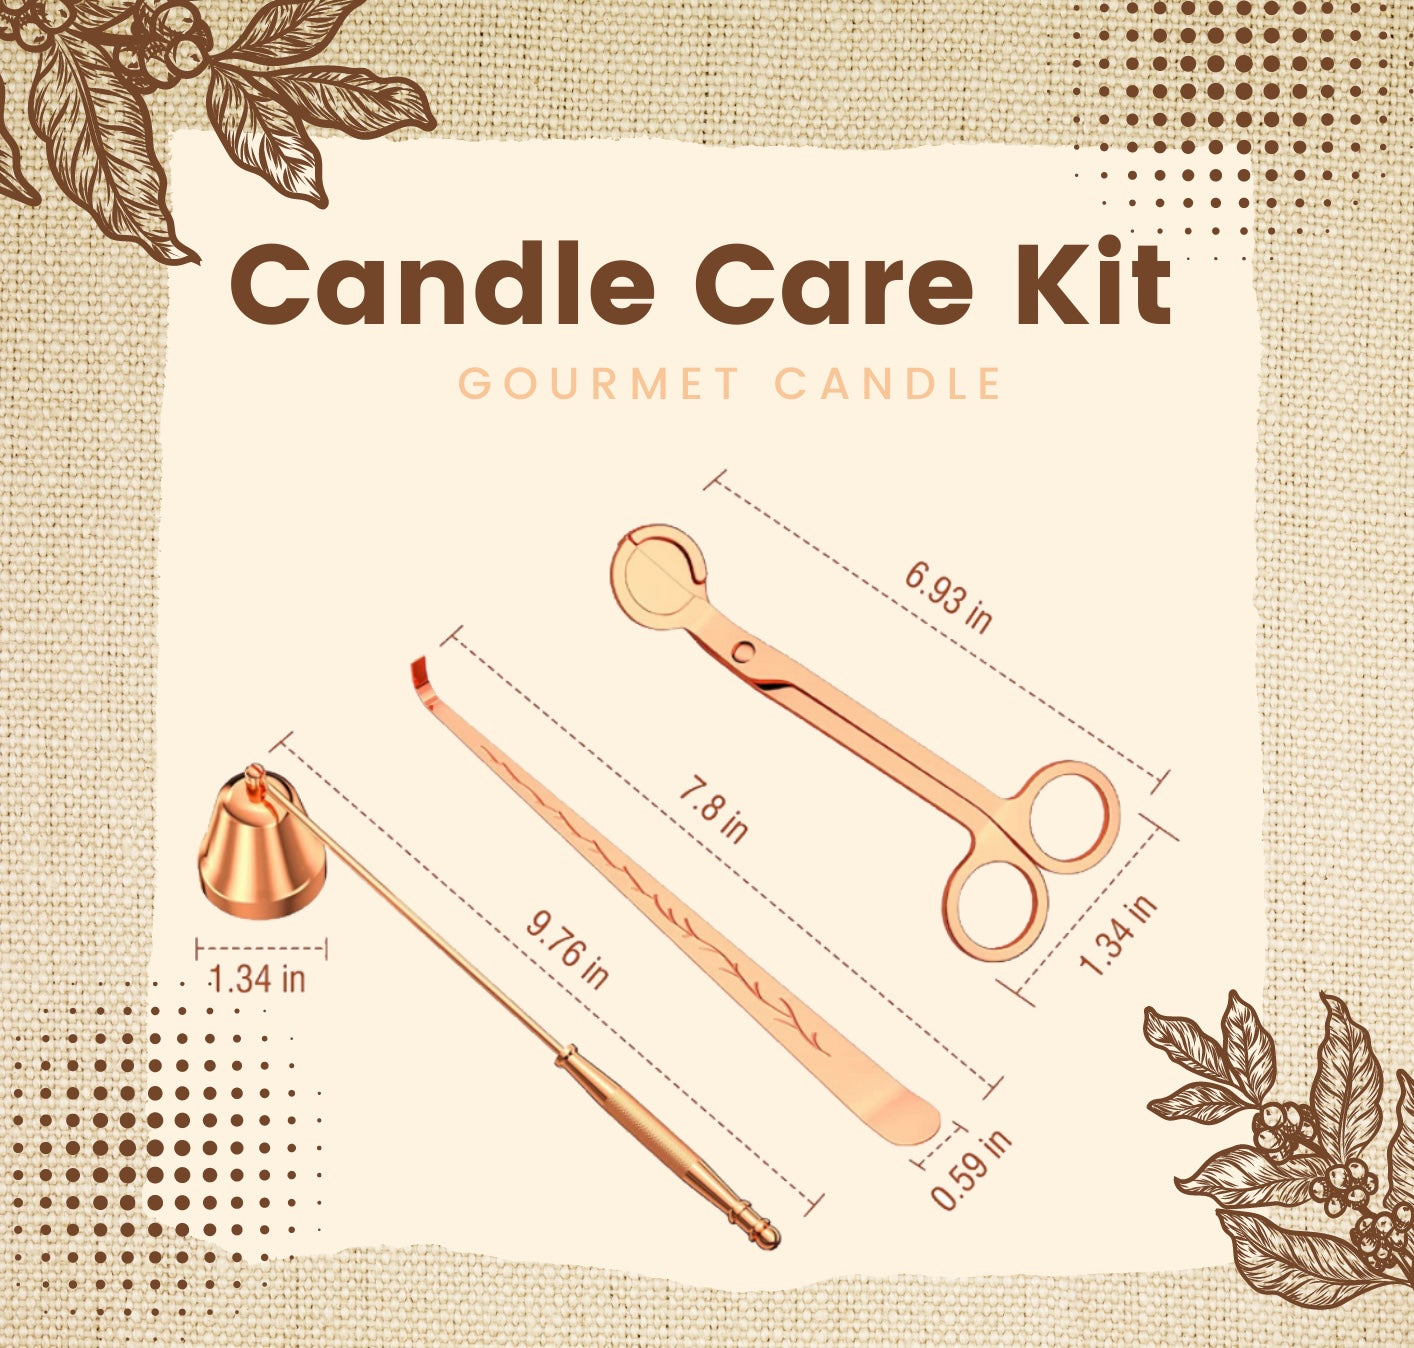 Candle Care Set